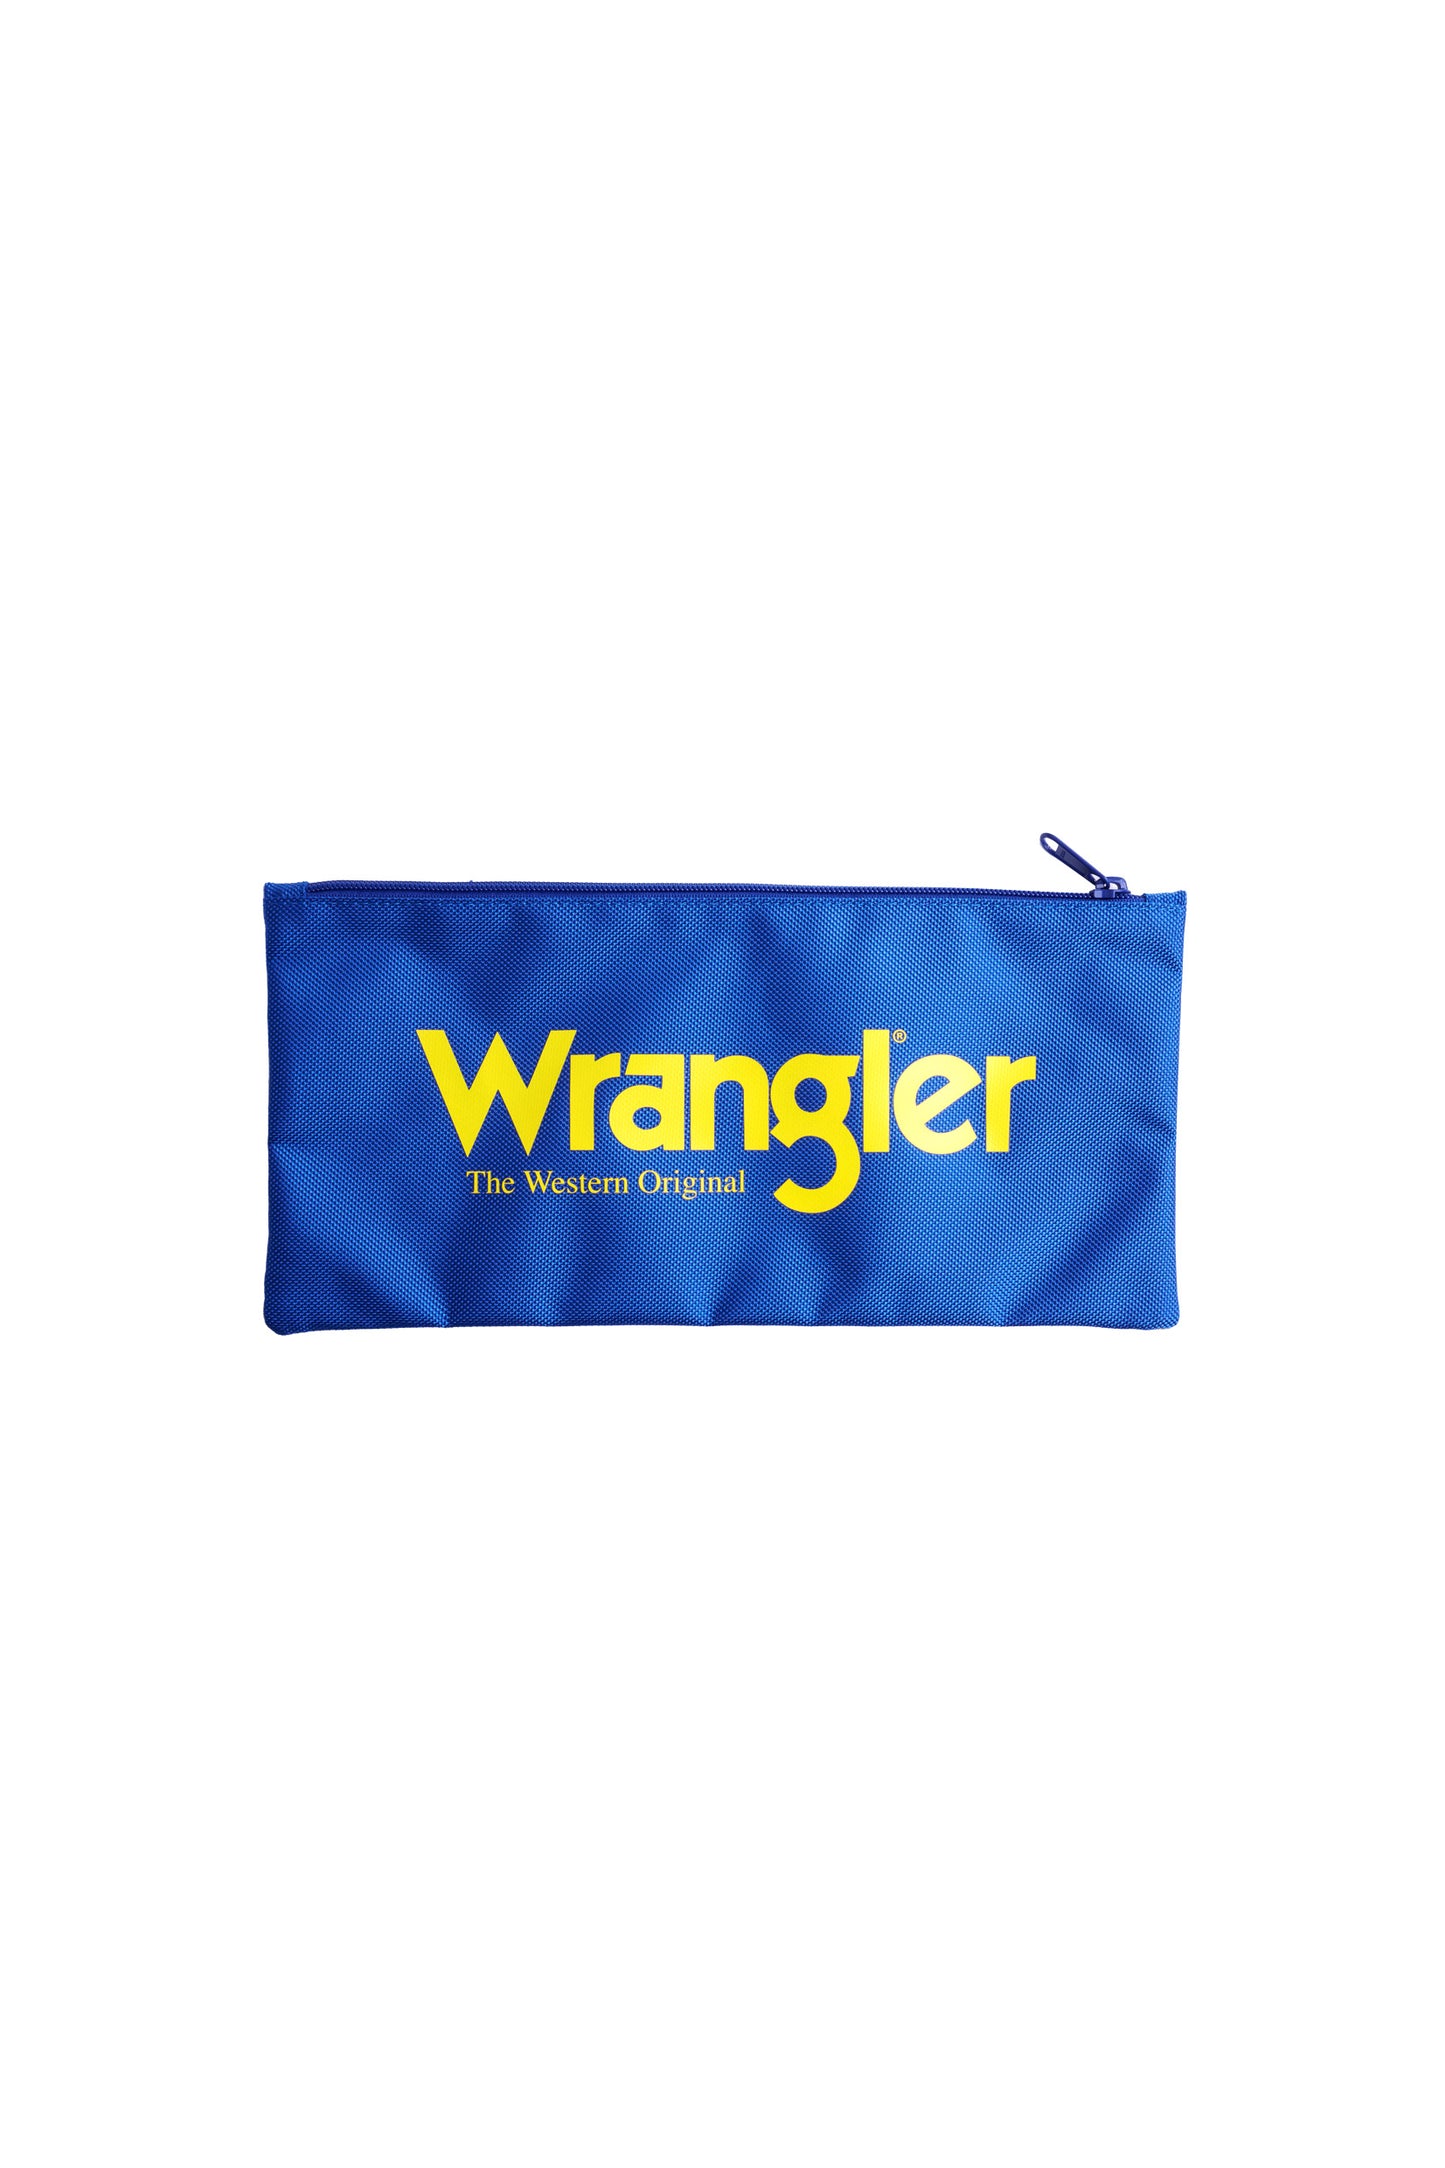 Wrangler Iconic Pencil Case - Blue/Yellow - XCP1927PEN